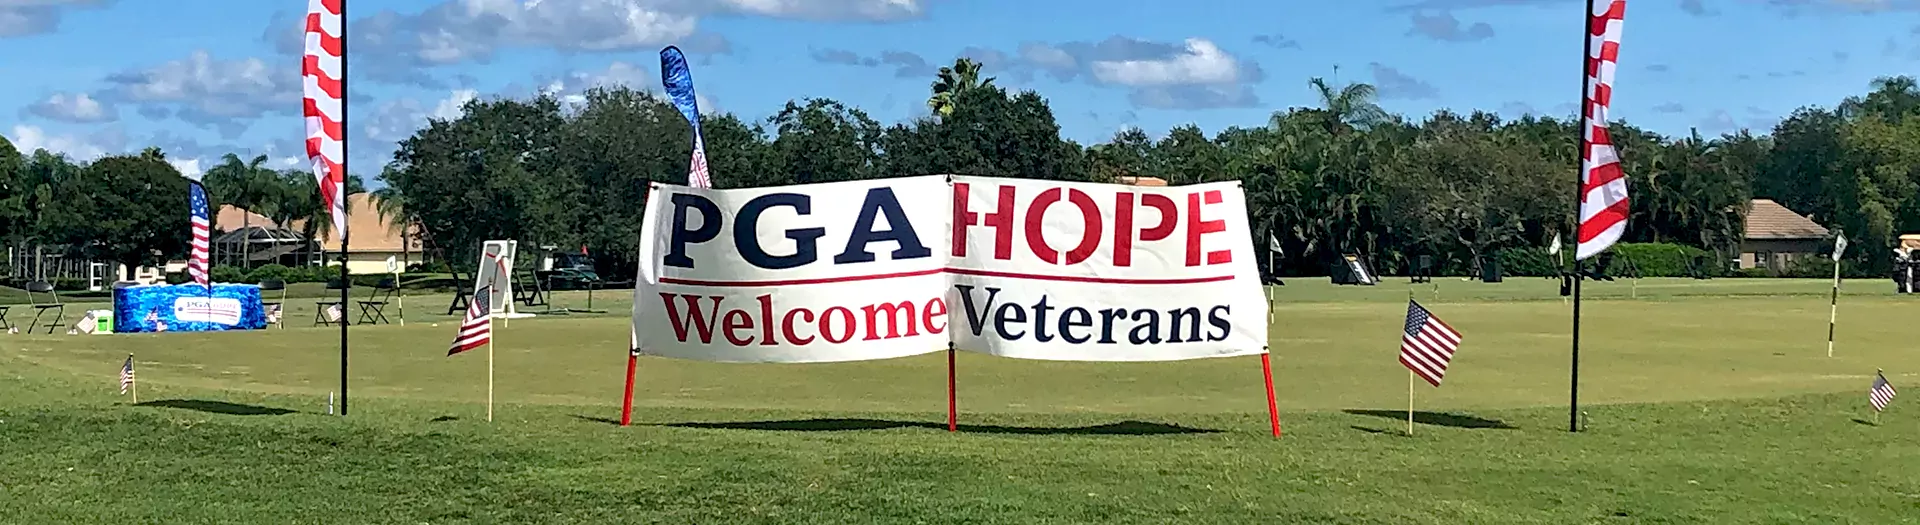 PGA Hope Welcome Veterans signage